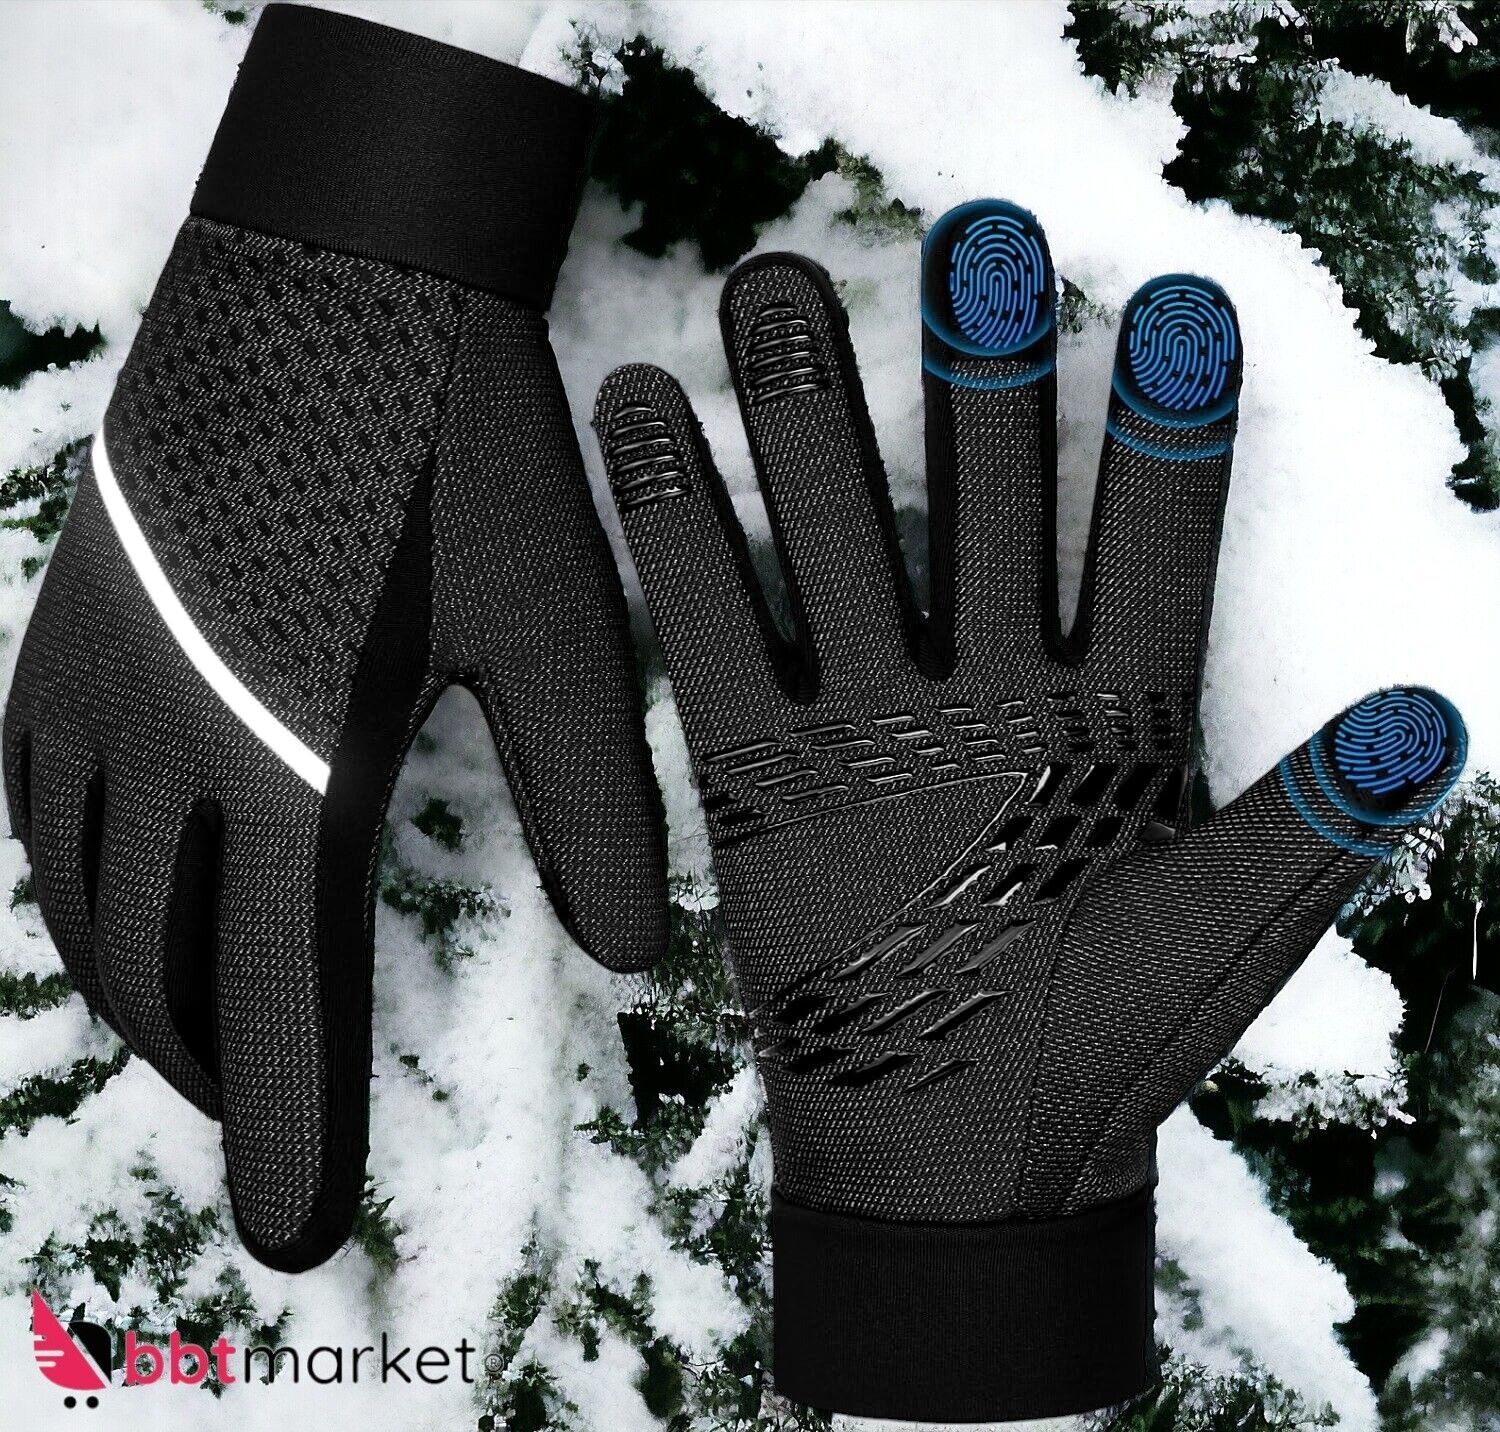 Thermo Touchscreen Winter Handschuhe Damen Herren Unisex Warme Windproof Fahrrad